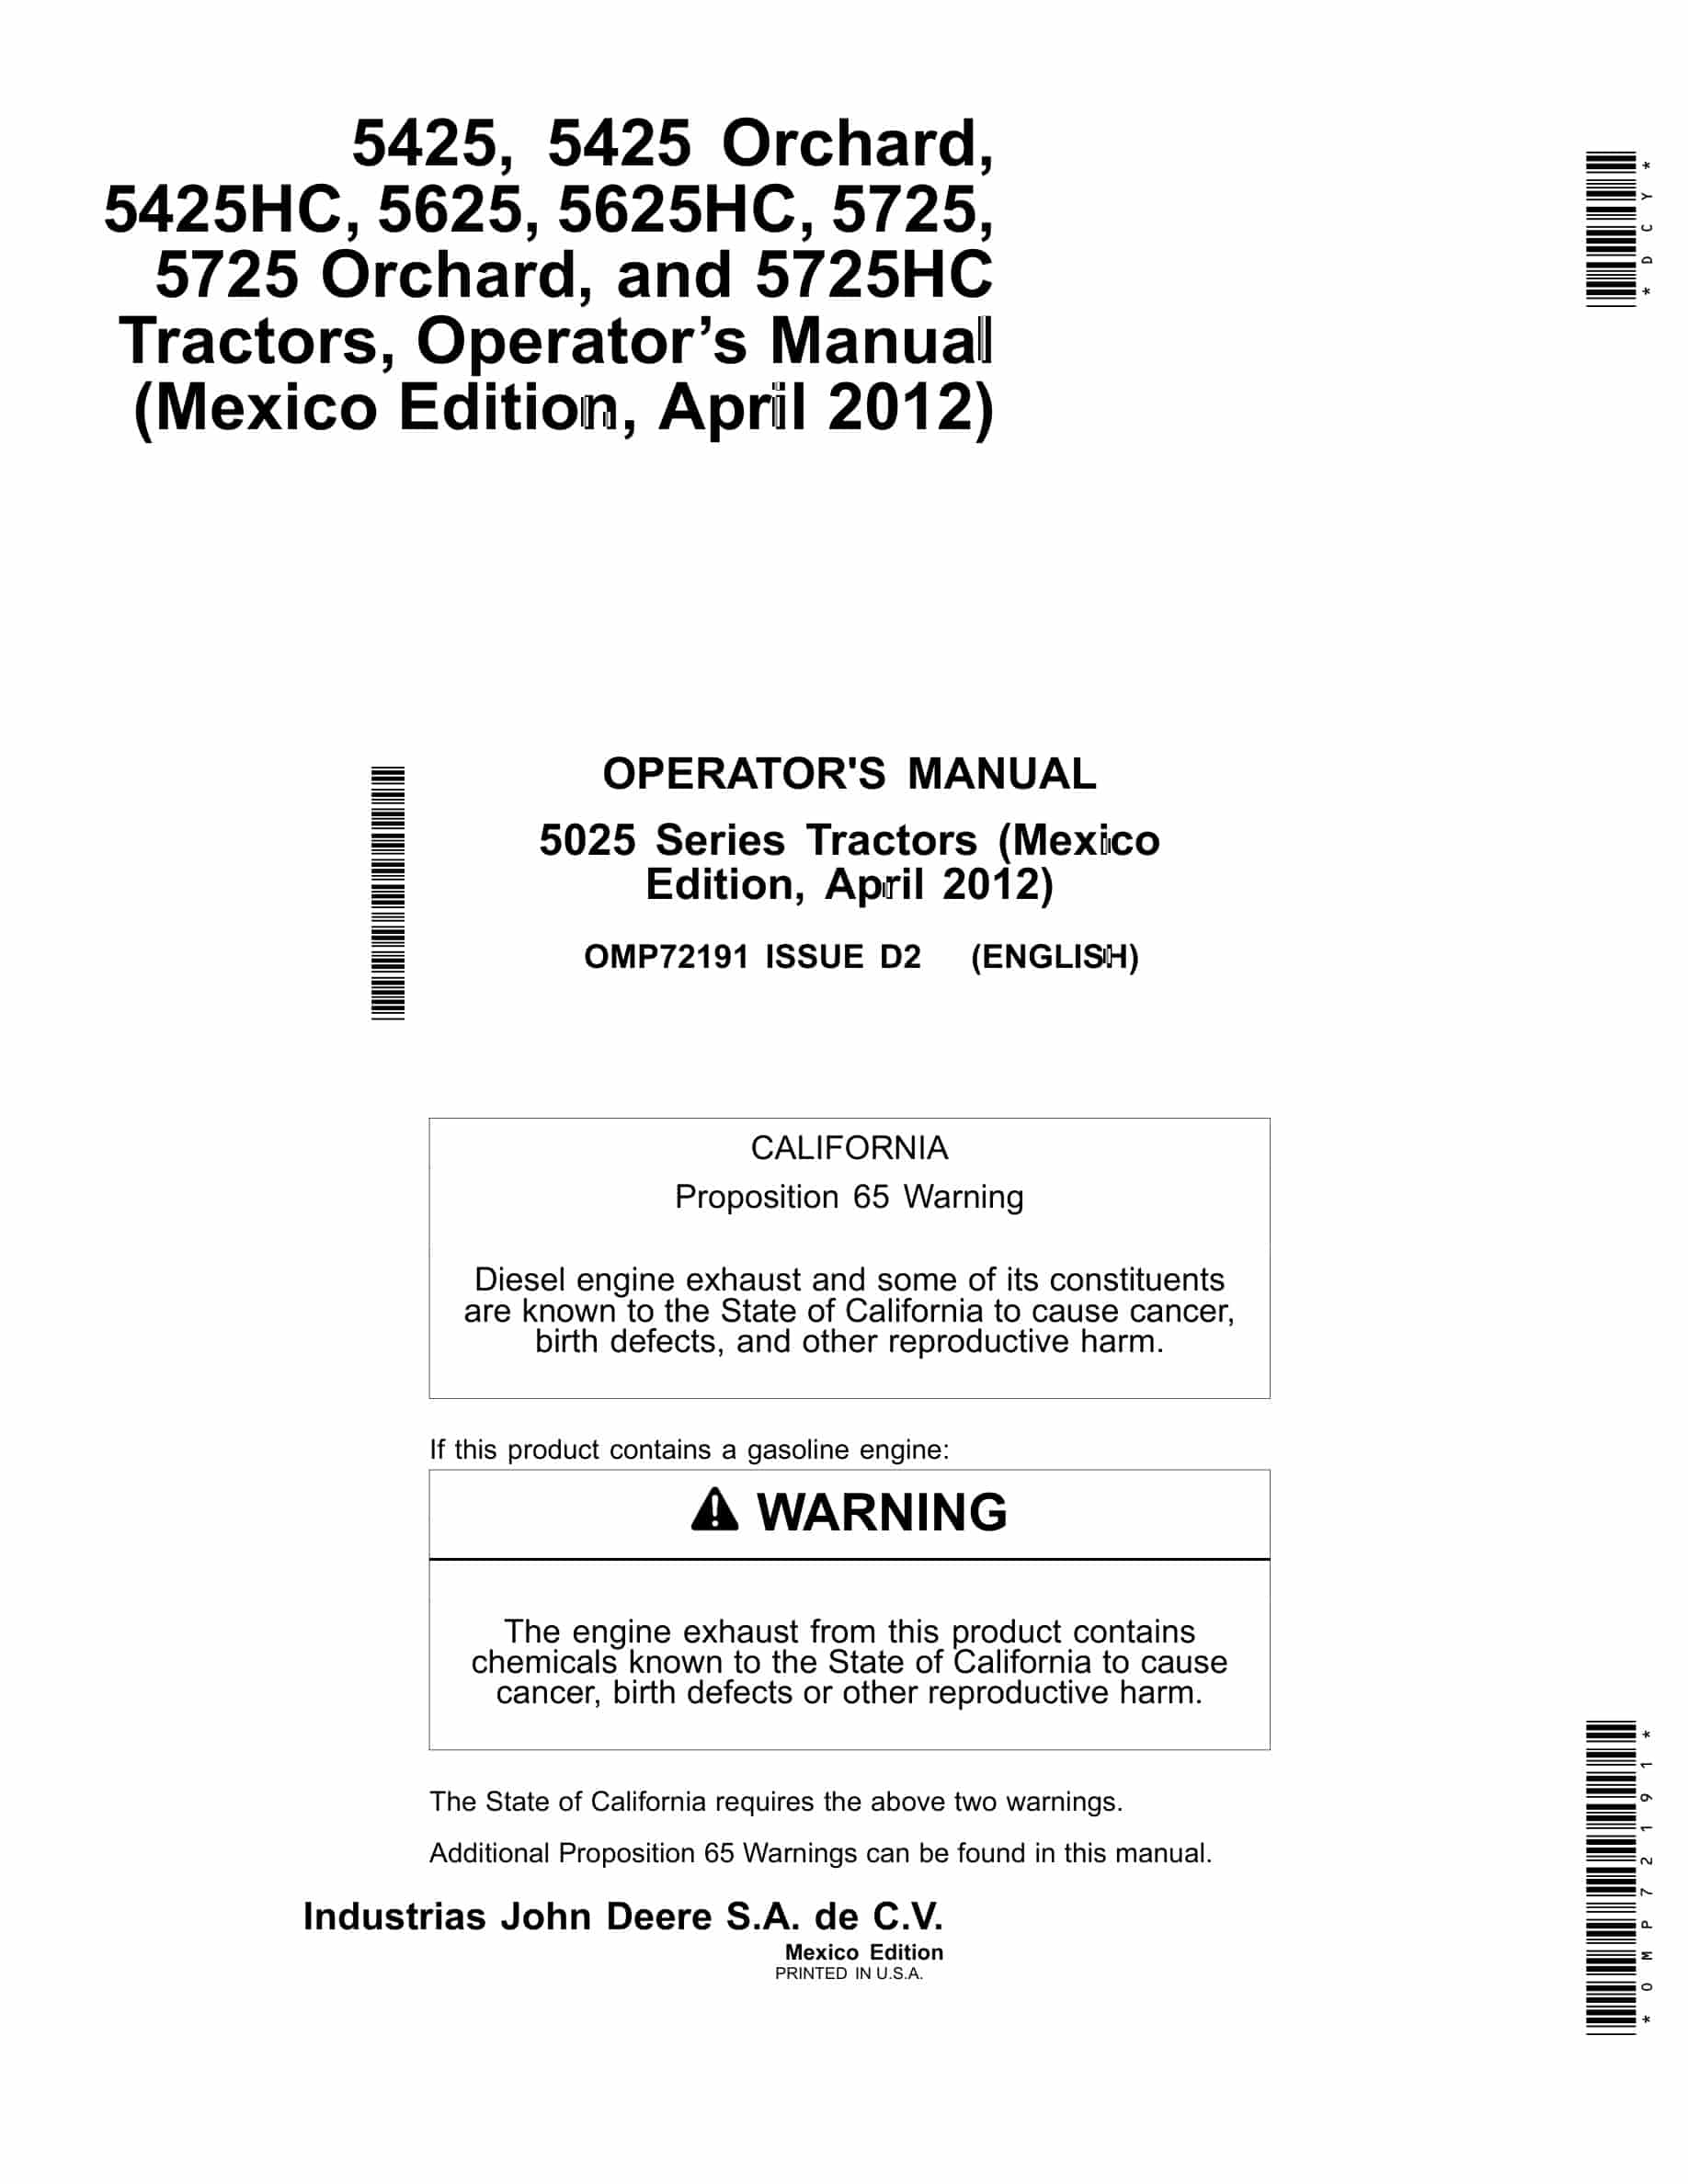 John Deere 5025 Series Tractors Operator Manuals OMP72191-1